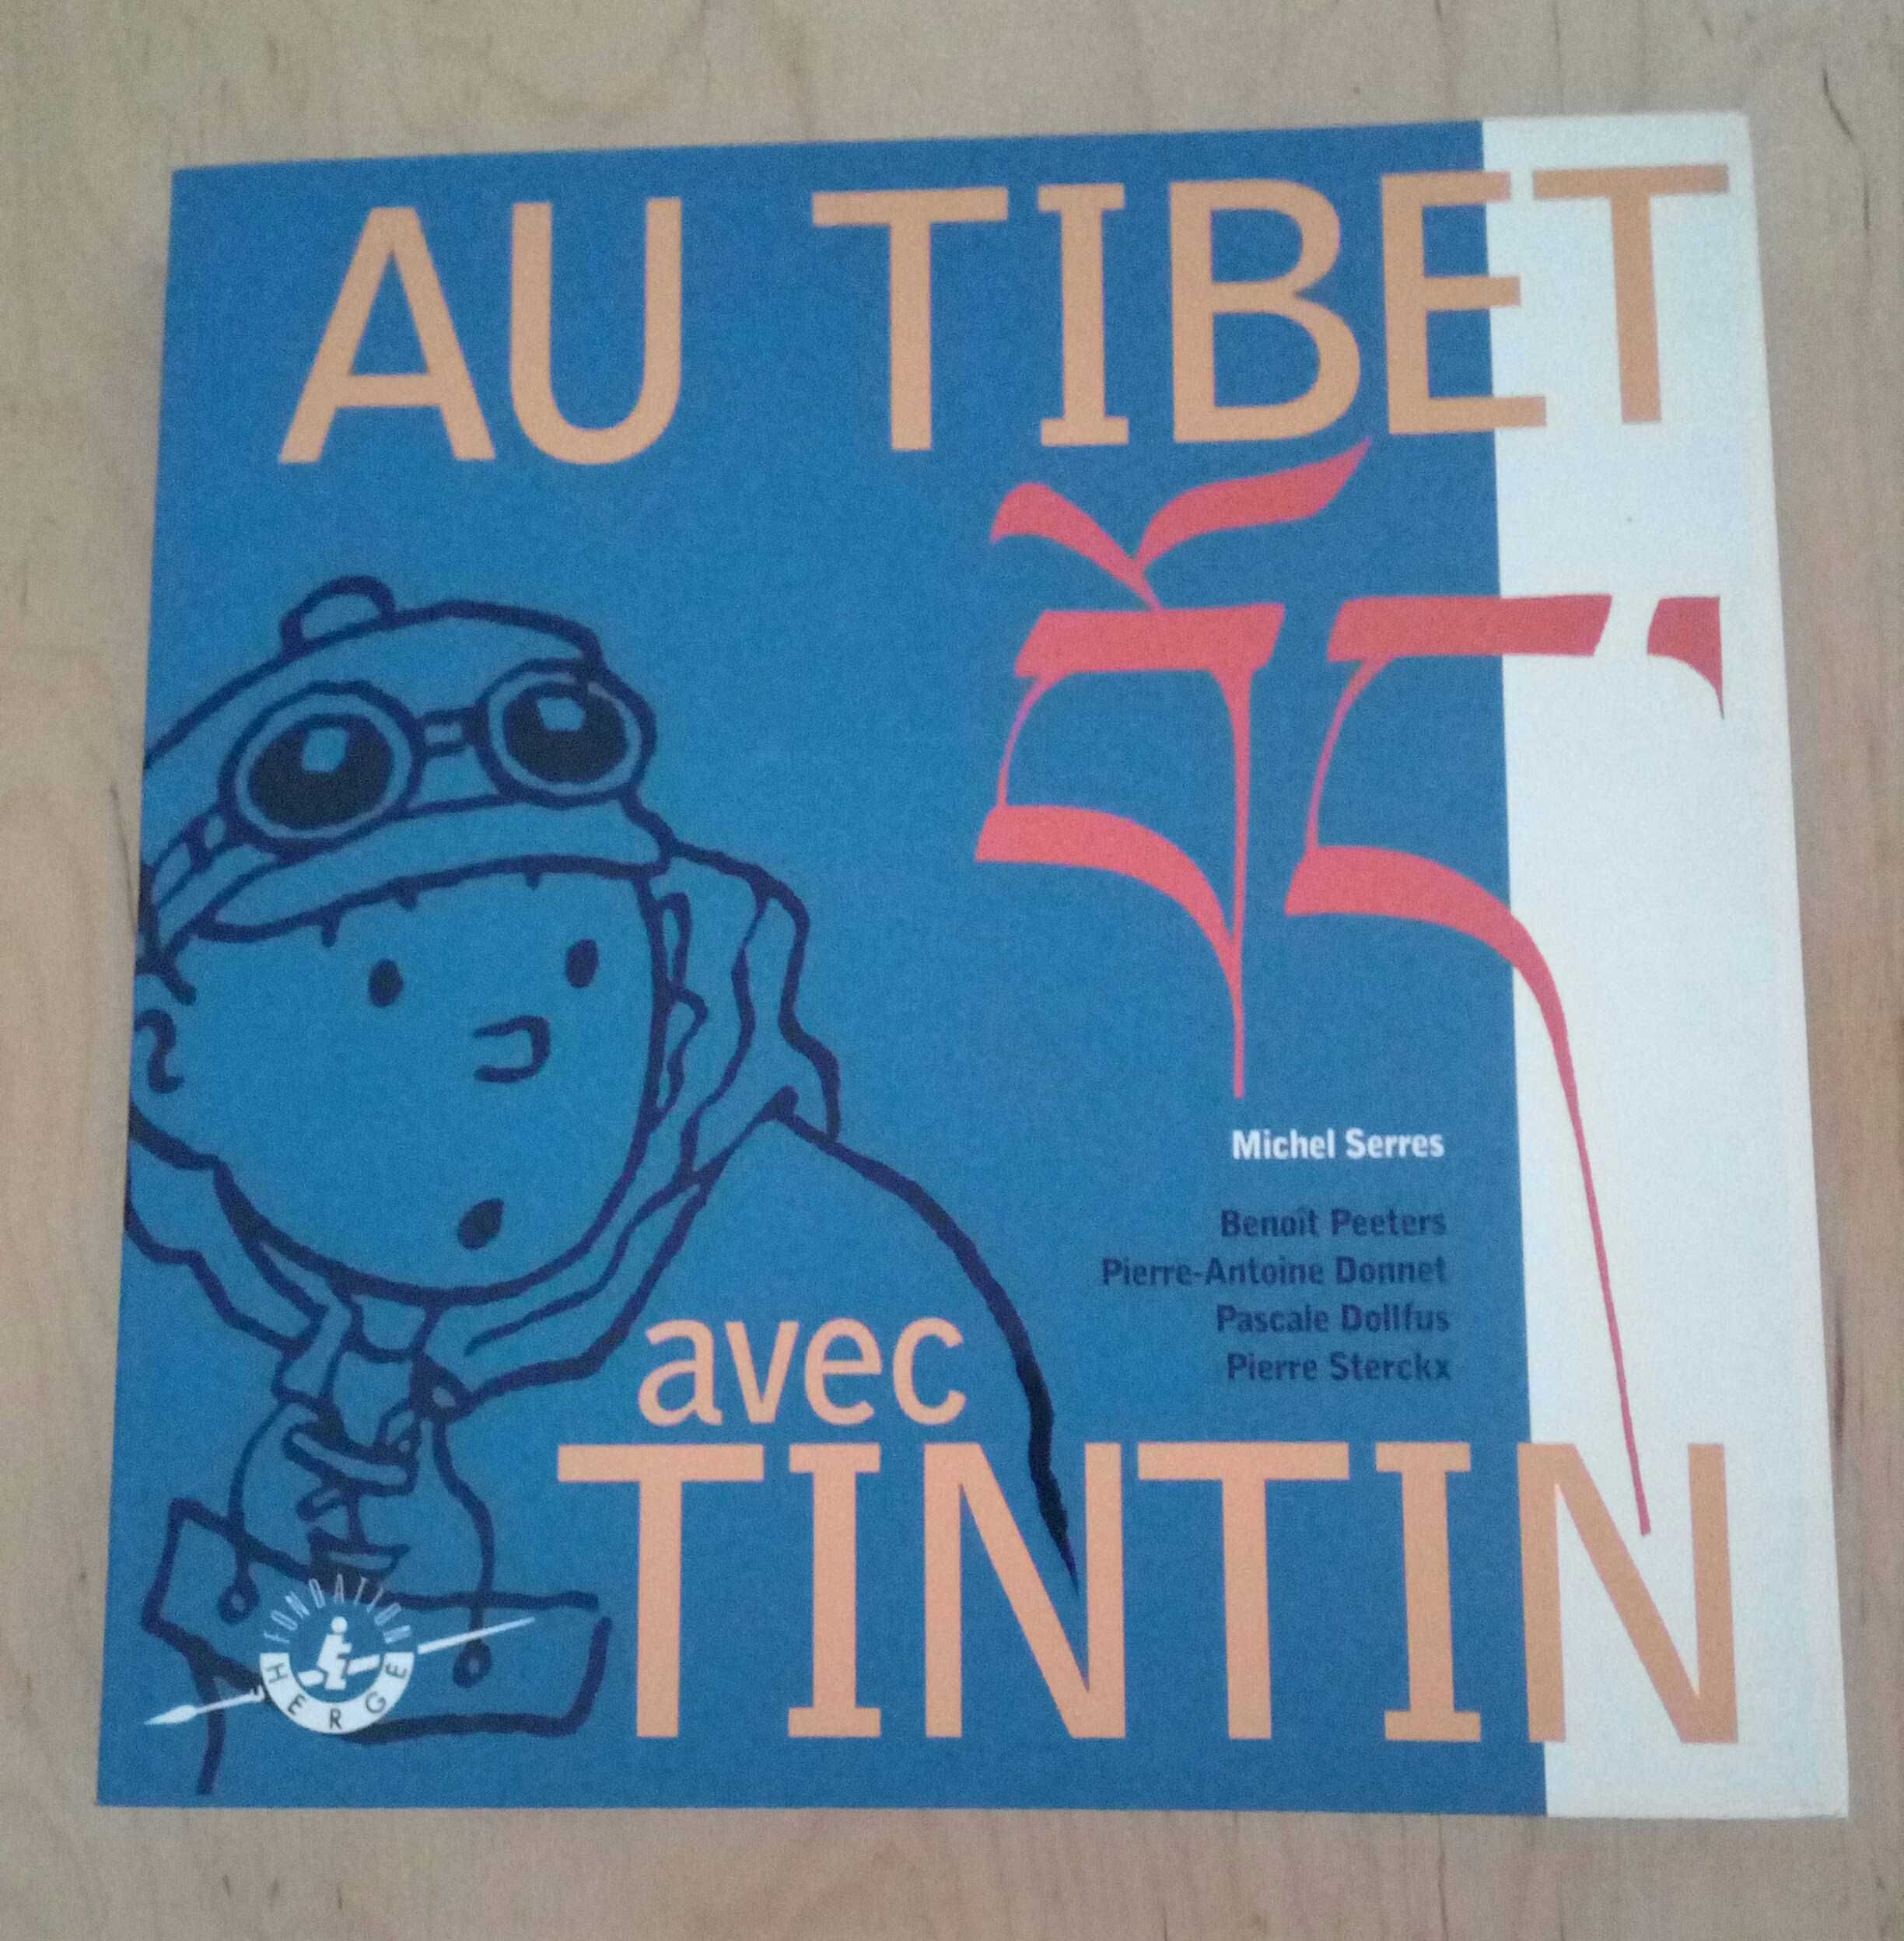 Au Tibet Avec Tintin